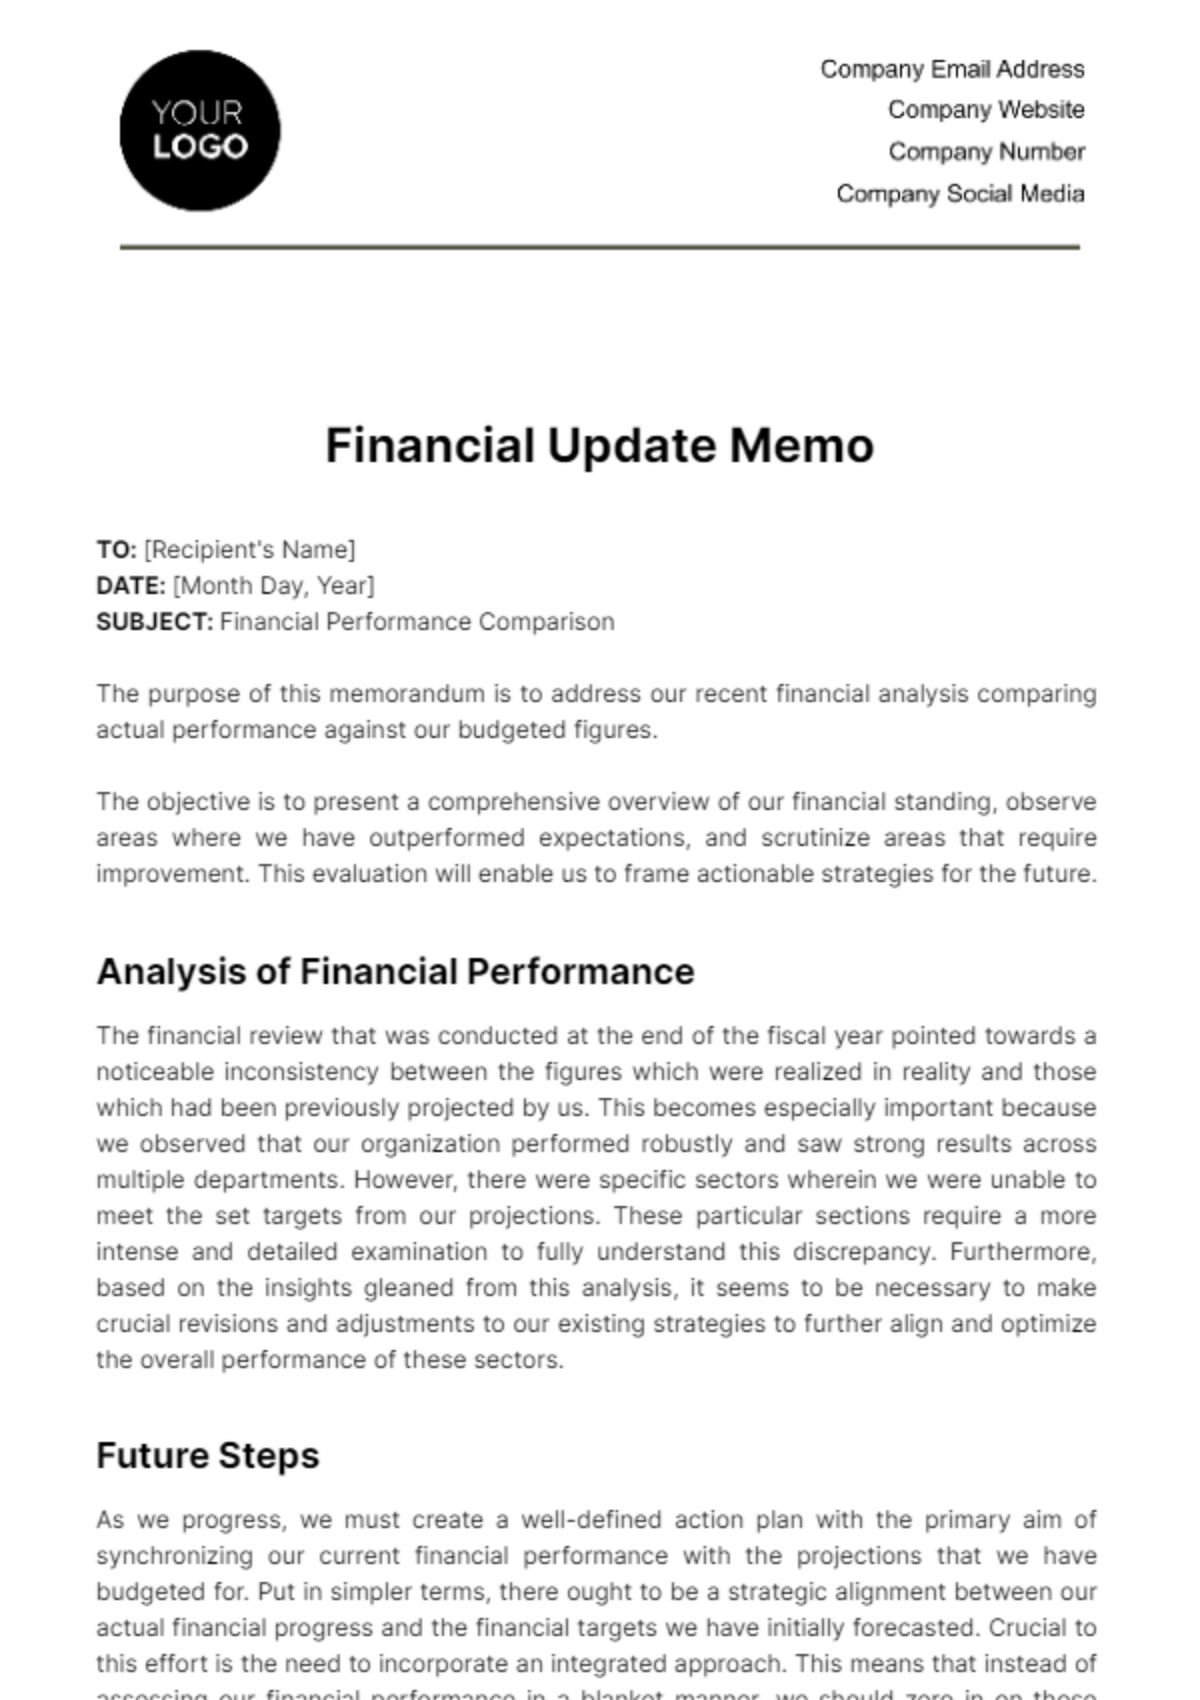 Financial Update Memo Template